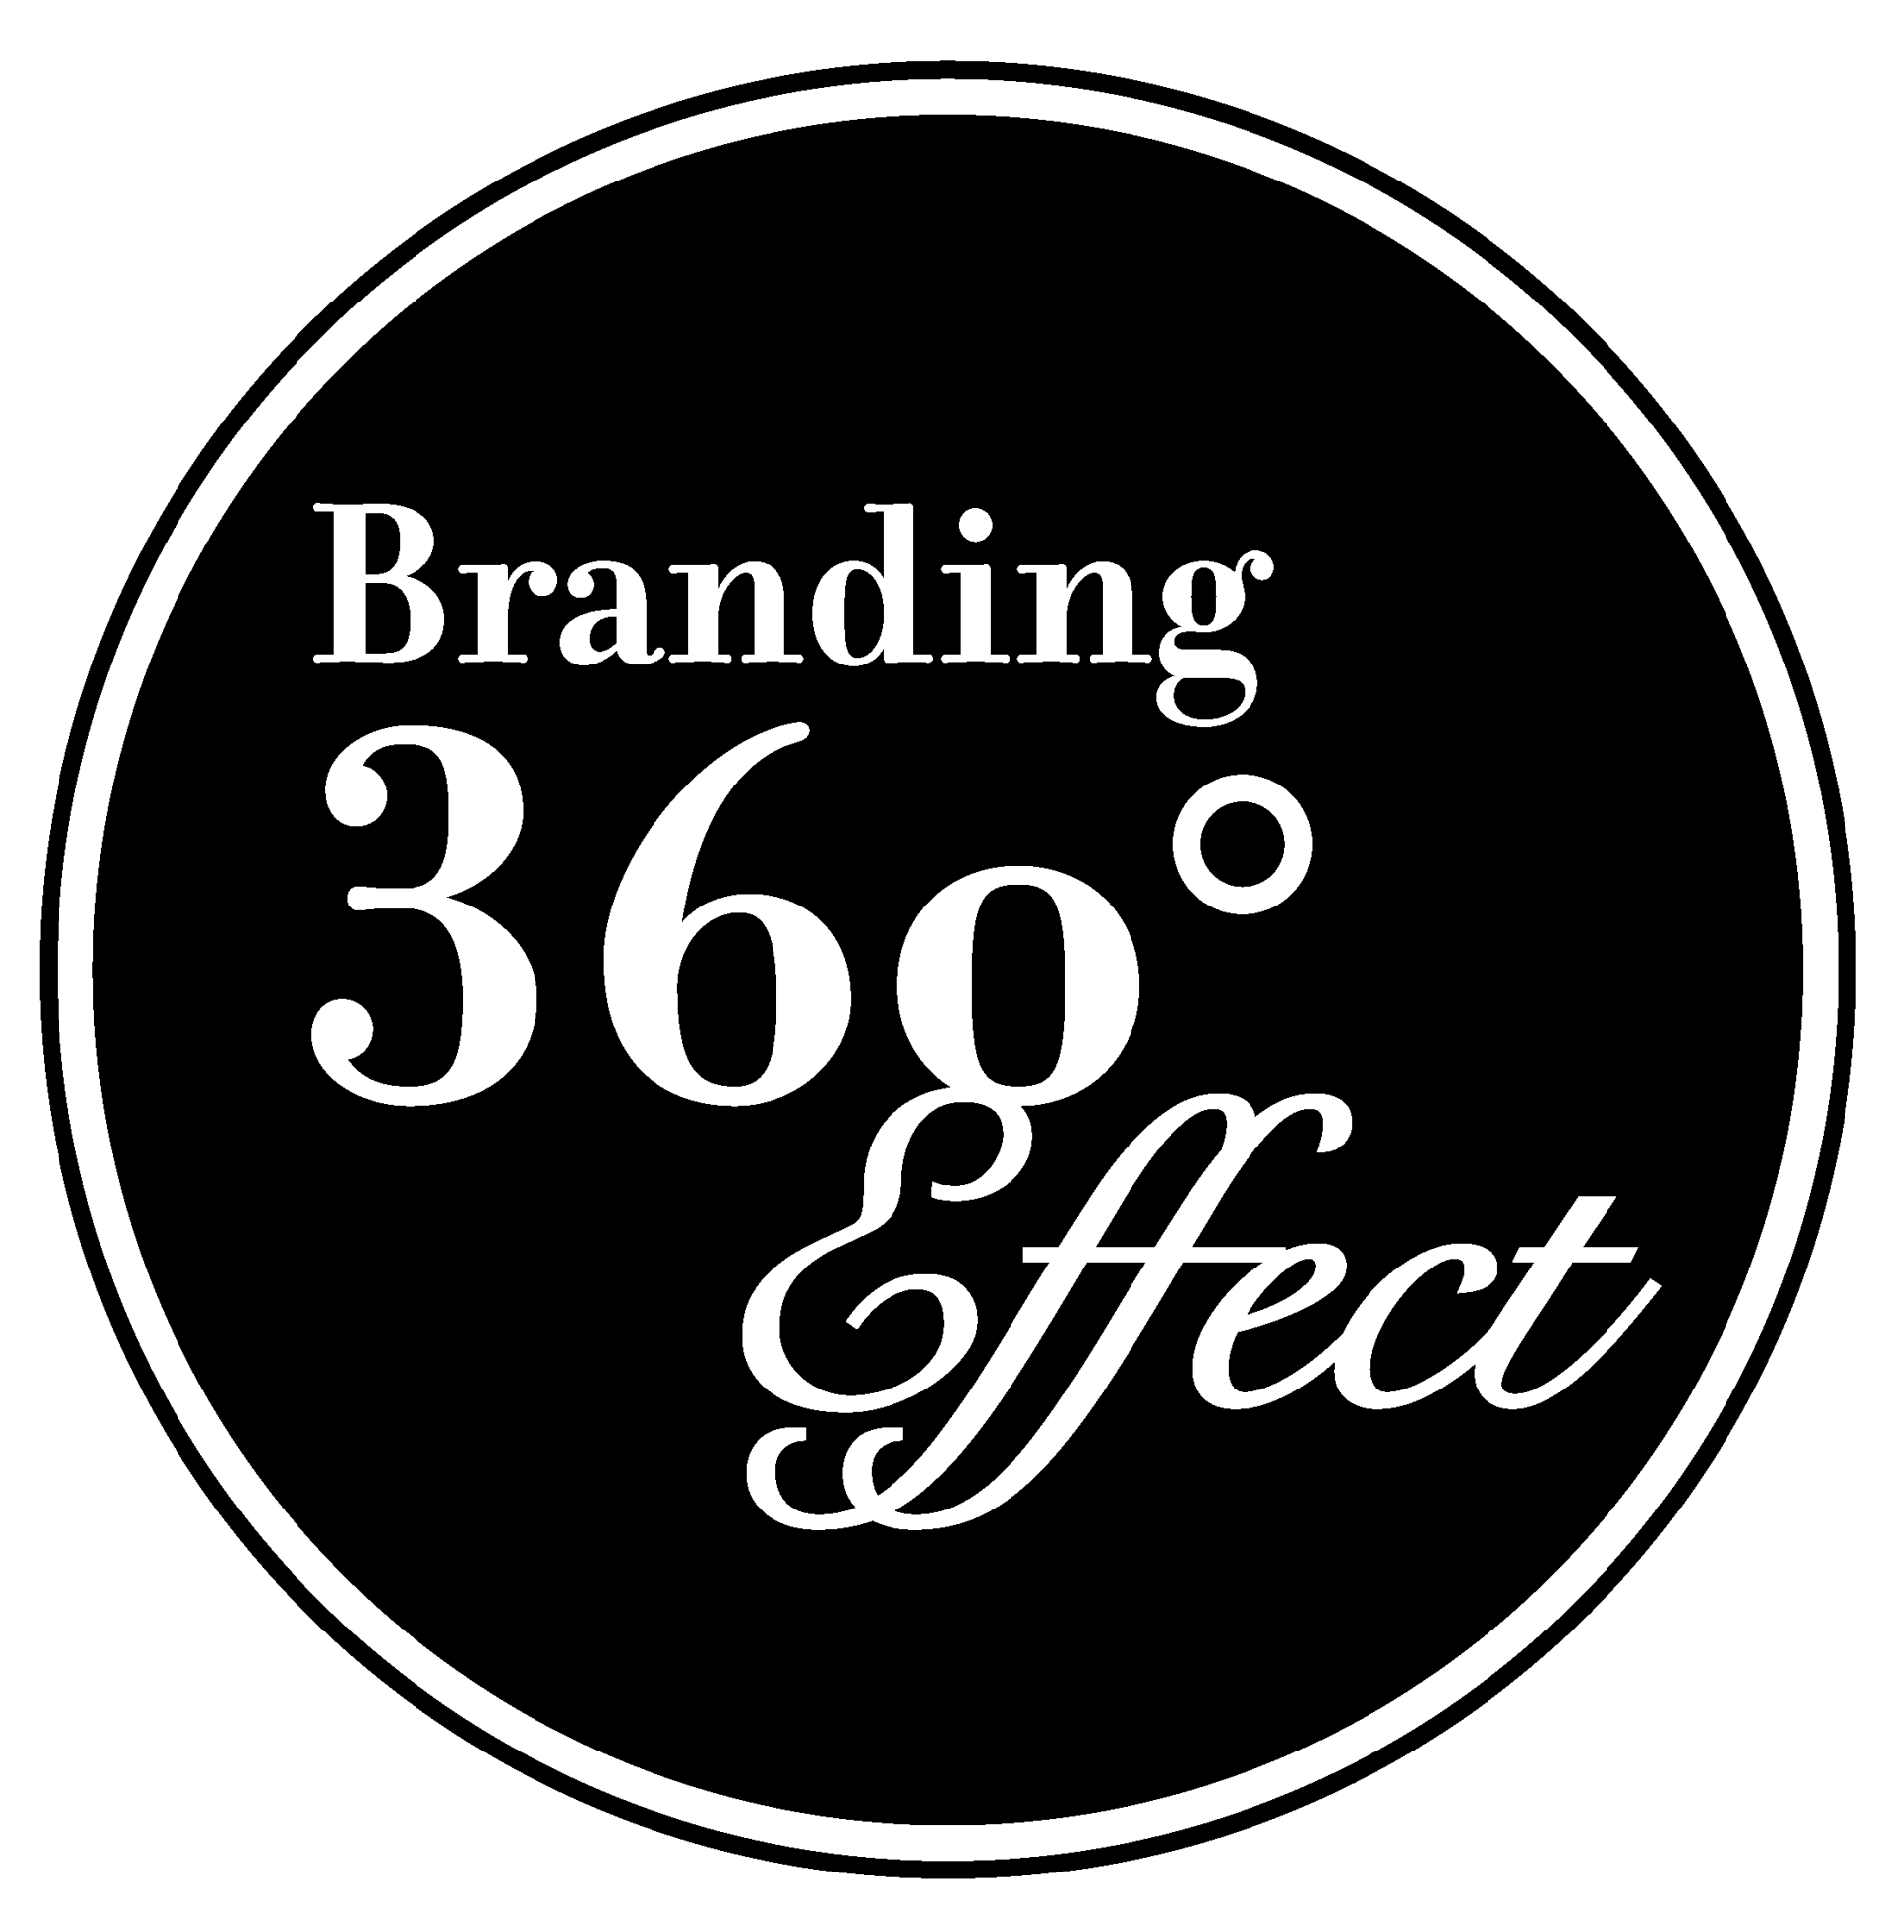 Branding 360° Effect